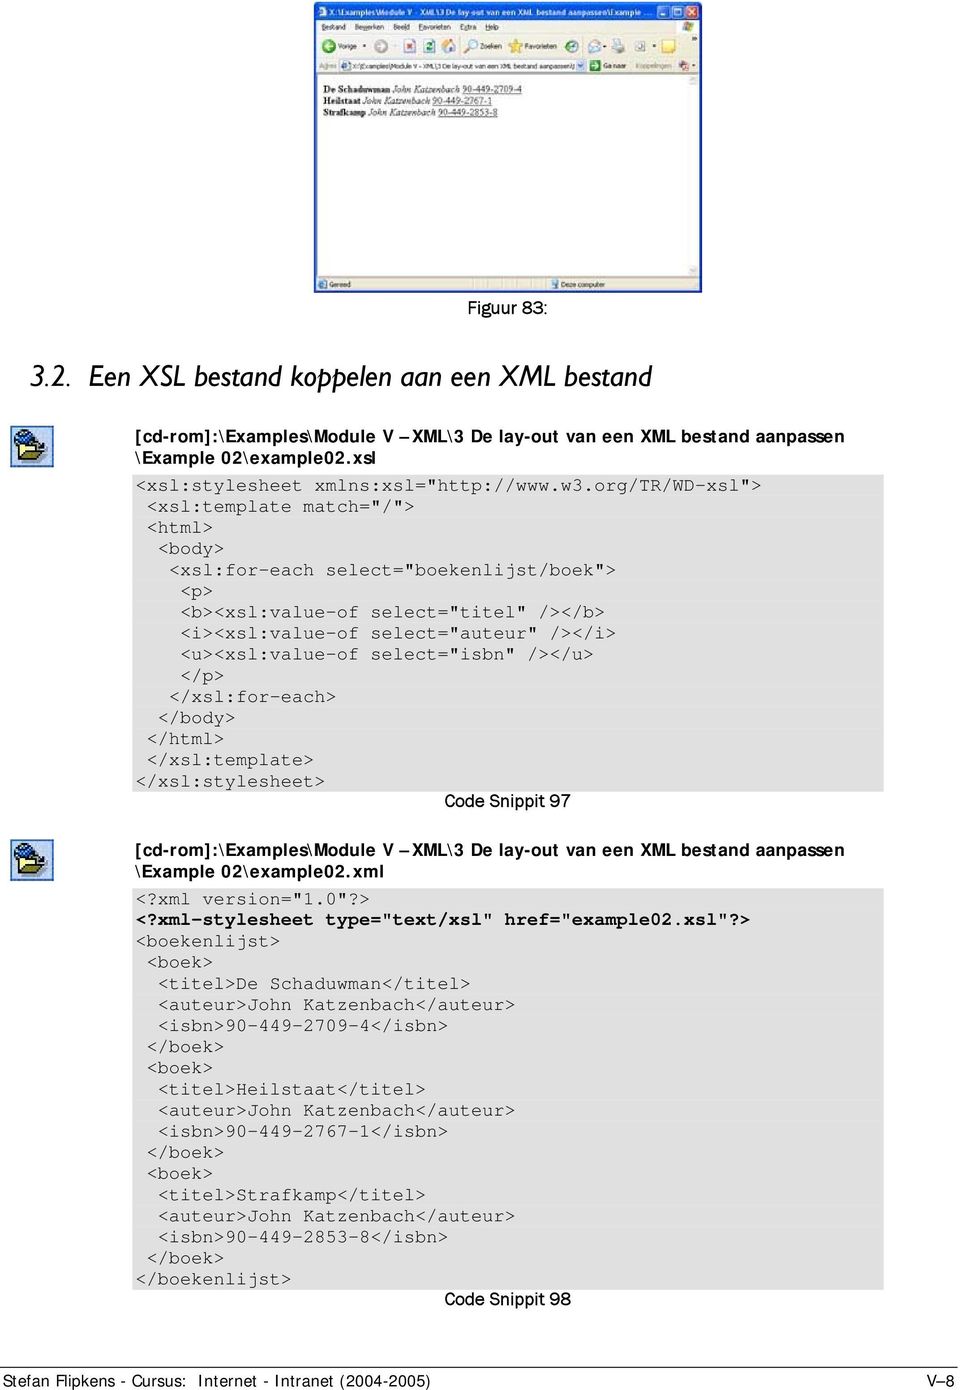 select="isbn" /></u> </p> </xsl:for-each> </body> </html> </xsl:template> </xsl:stylesheet> Code Snippit 97 [cd-rom]:\examples\module V XML\3 De lay-out van een XML bestand aanpassen \Example